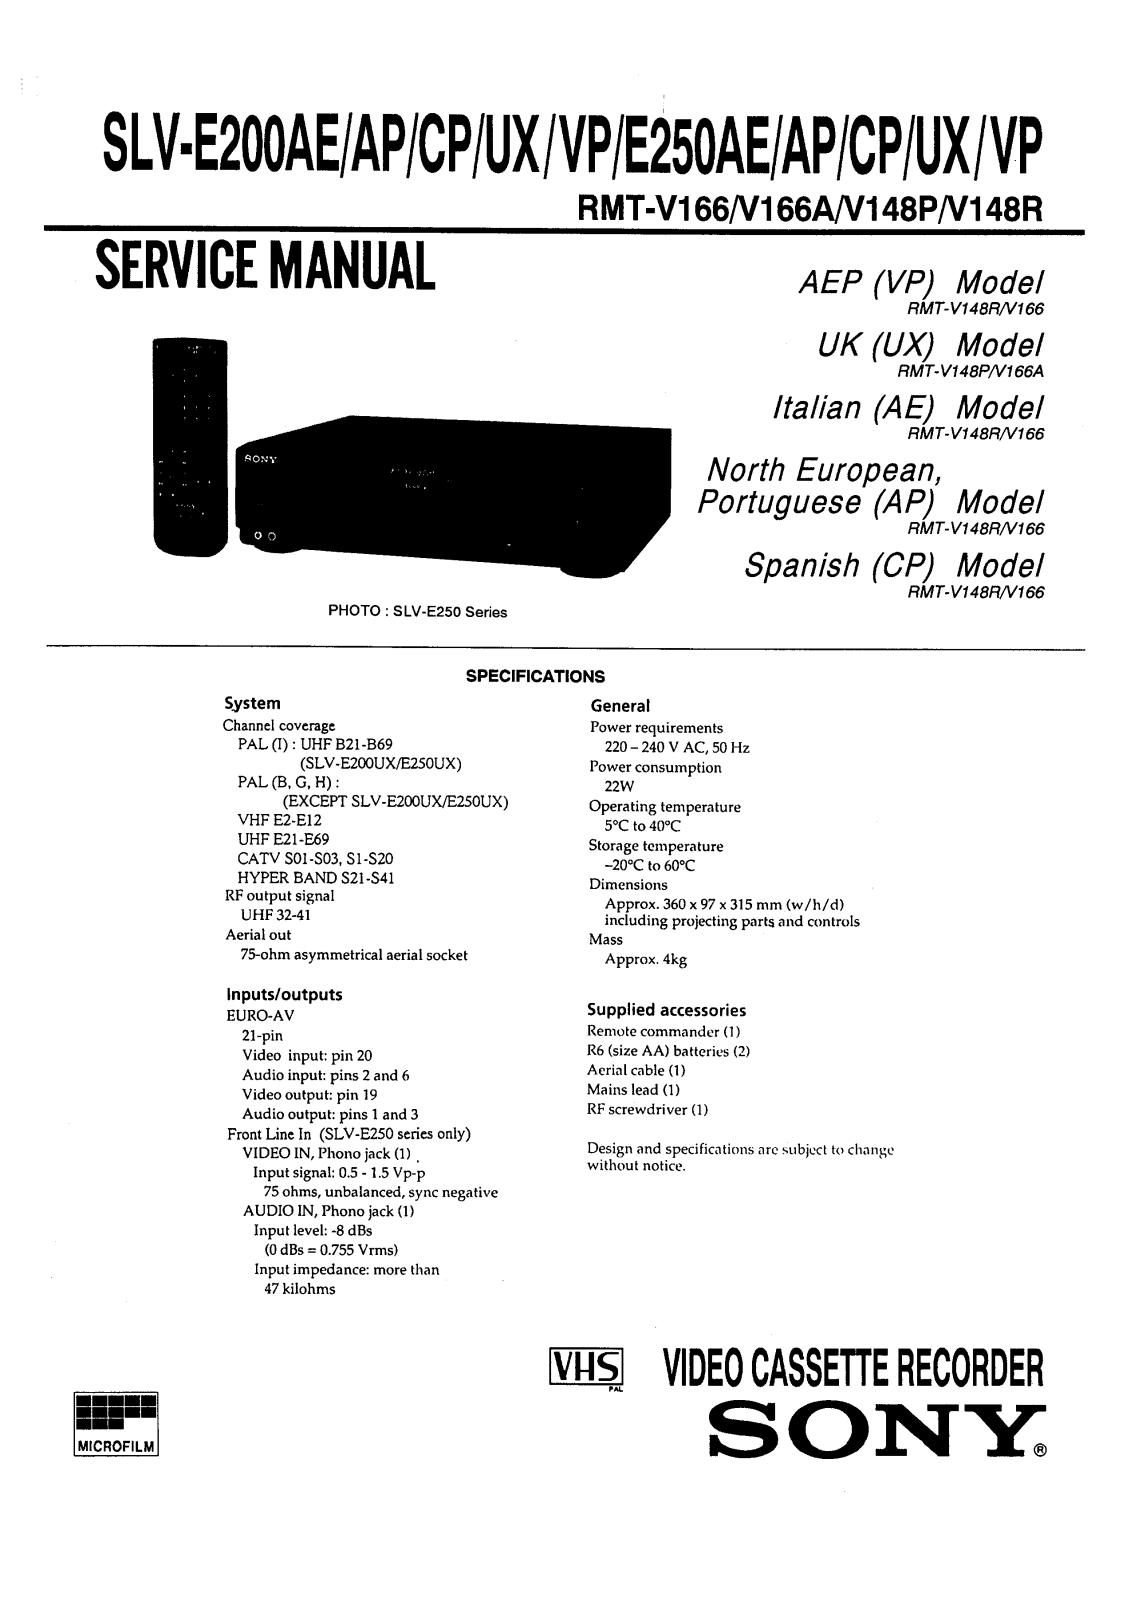 SONY SLV-E200AE, SLV-E200AP, SLV-E200CP, SLV-E200US, SLV-E200VP Service Manual